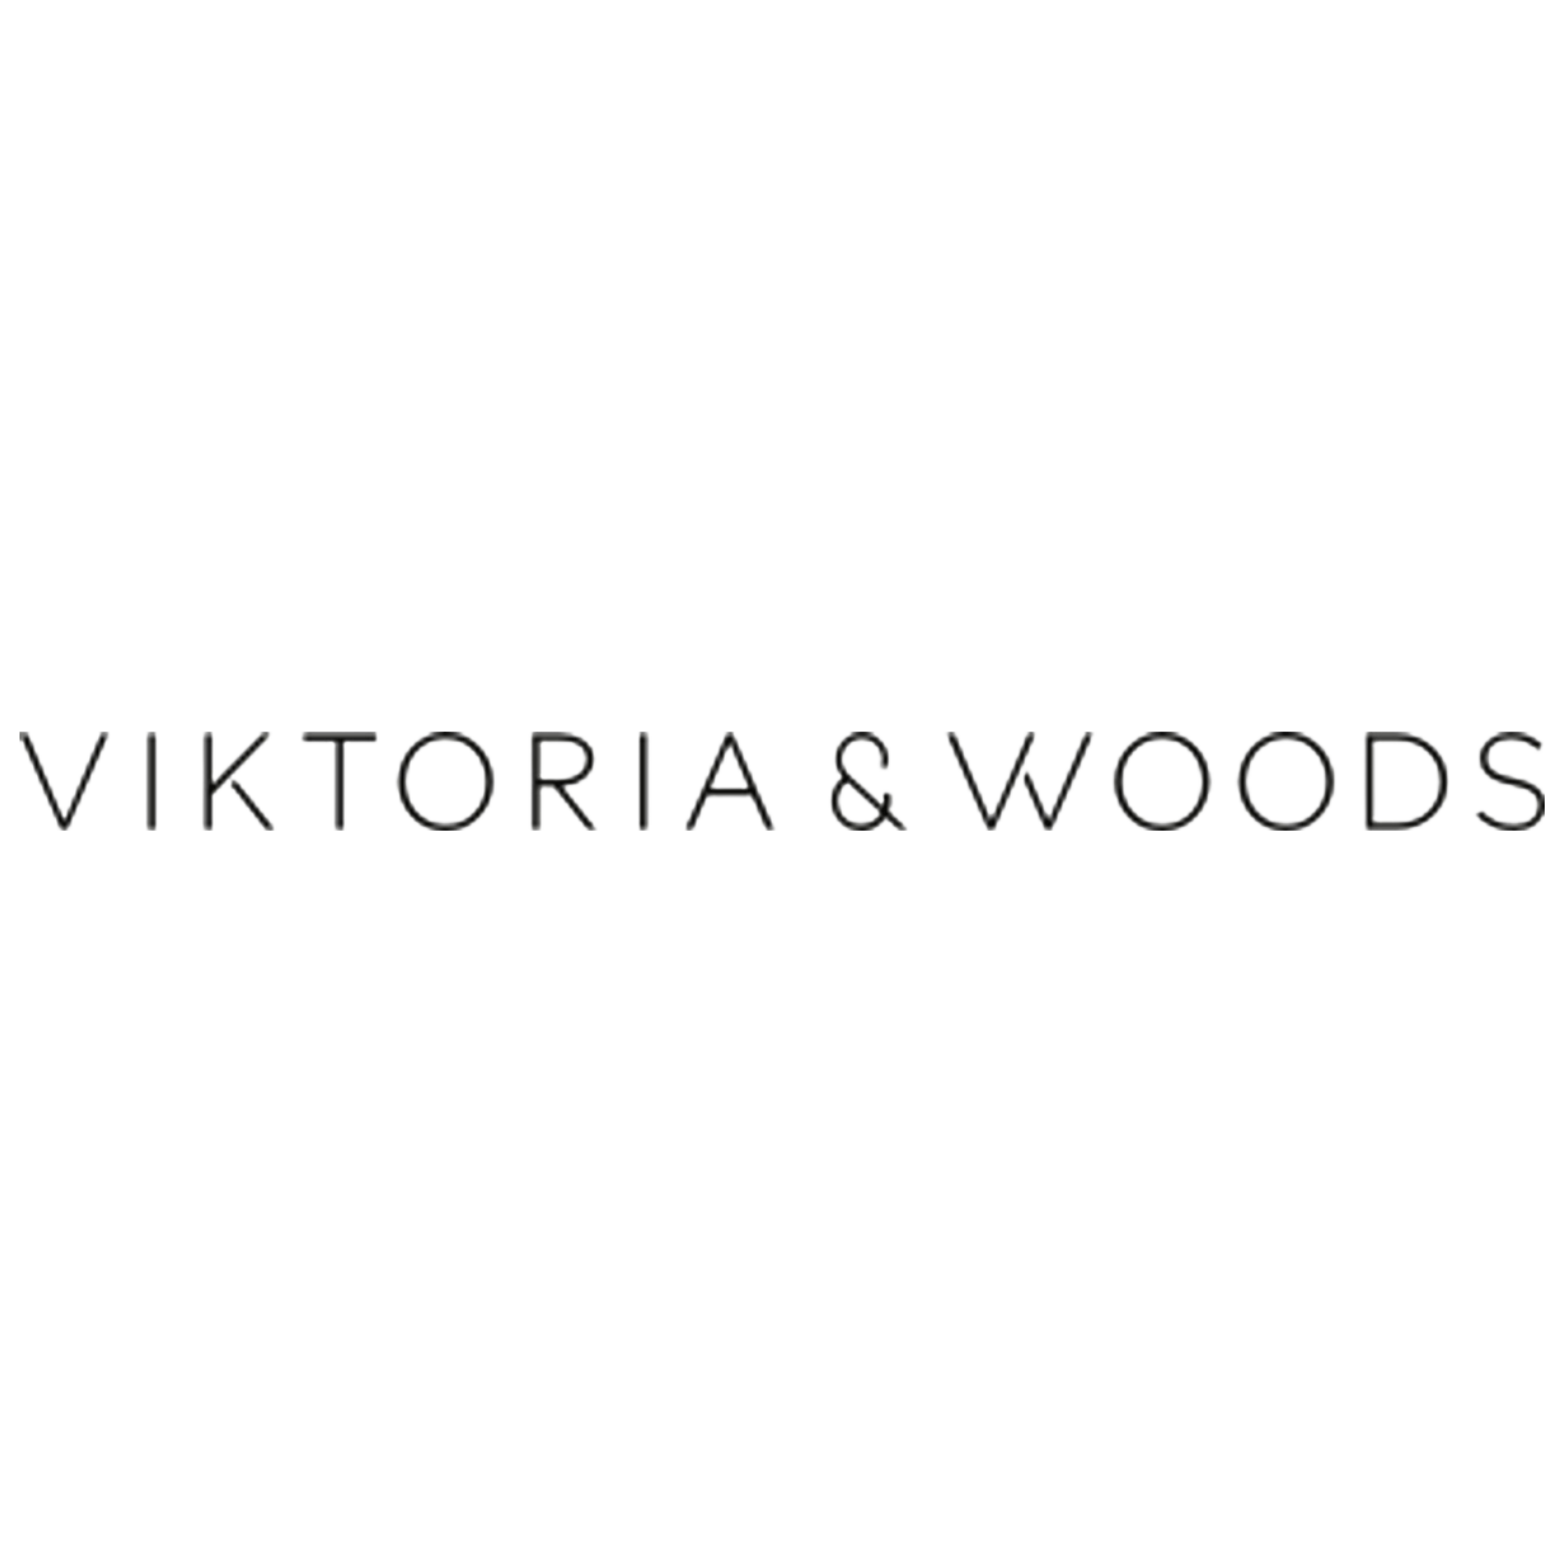 Vik & Woods